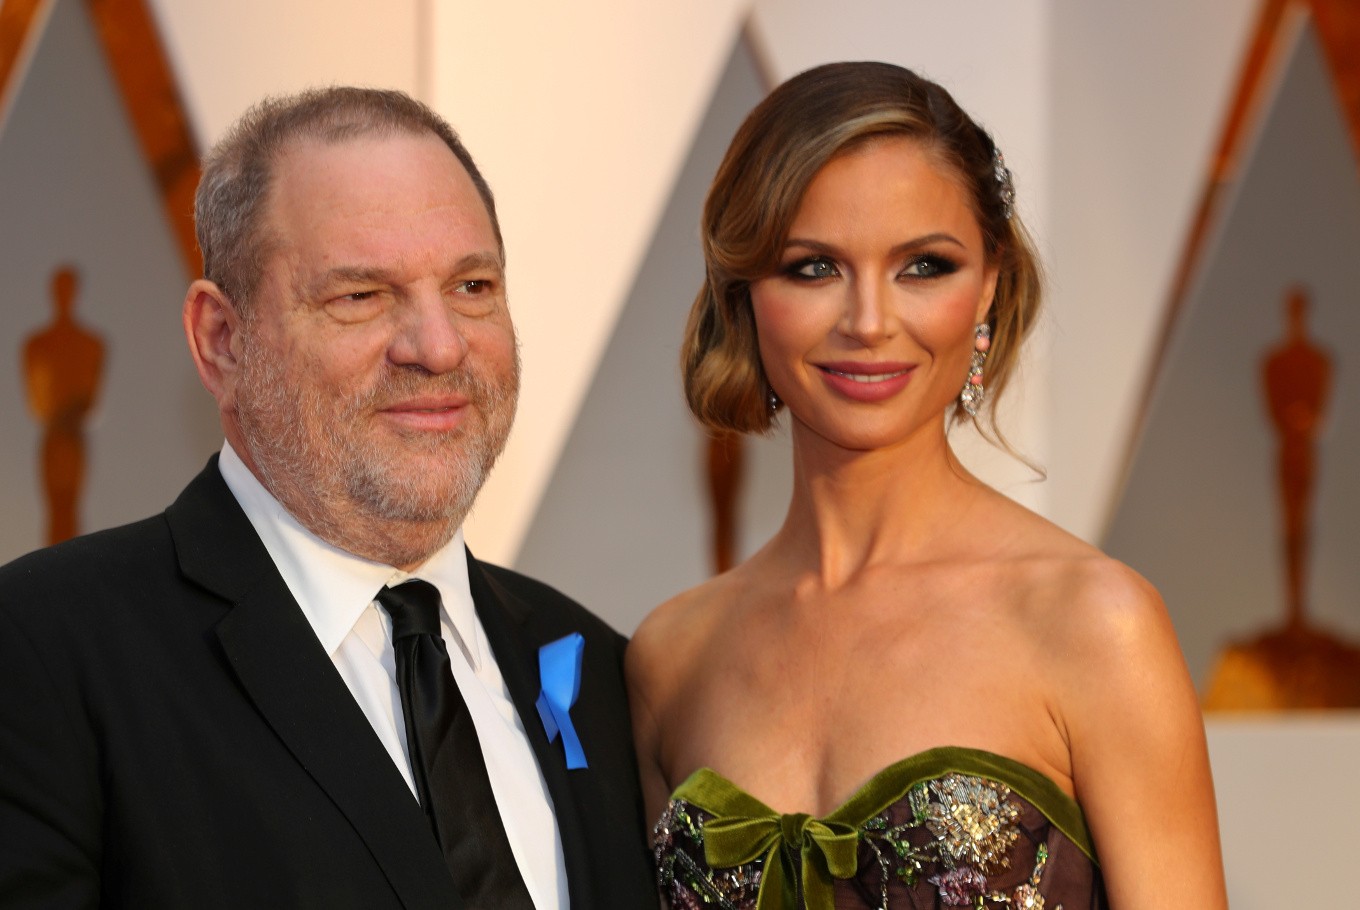 Harvey Weinsteins estranged wife says accusations sickened her - Entertainment